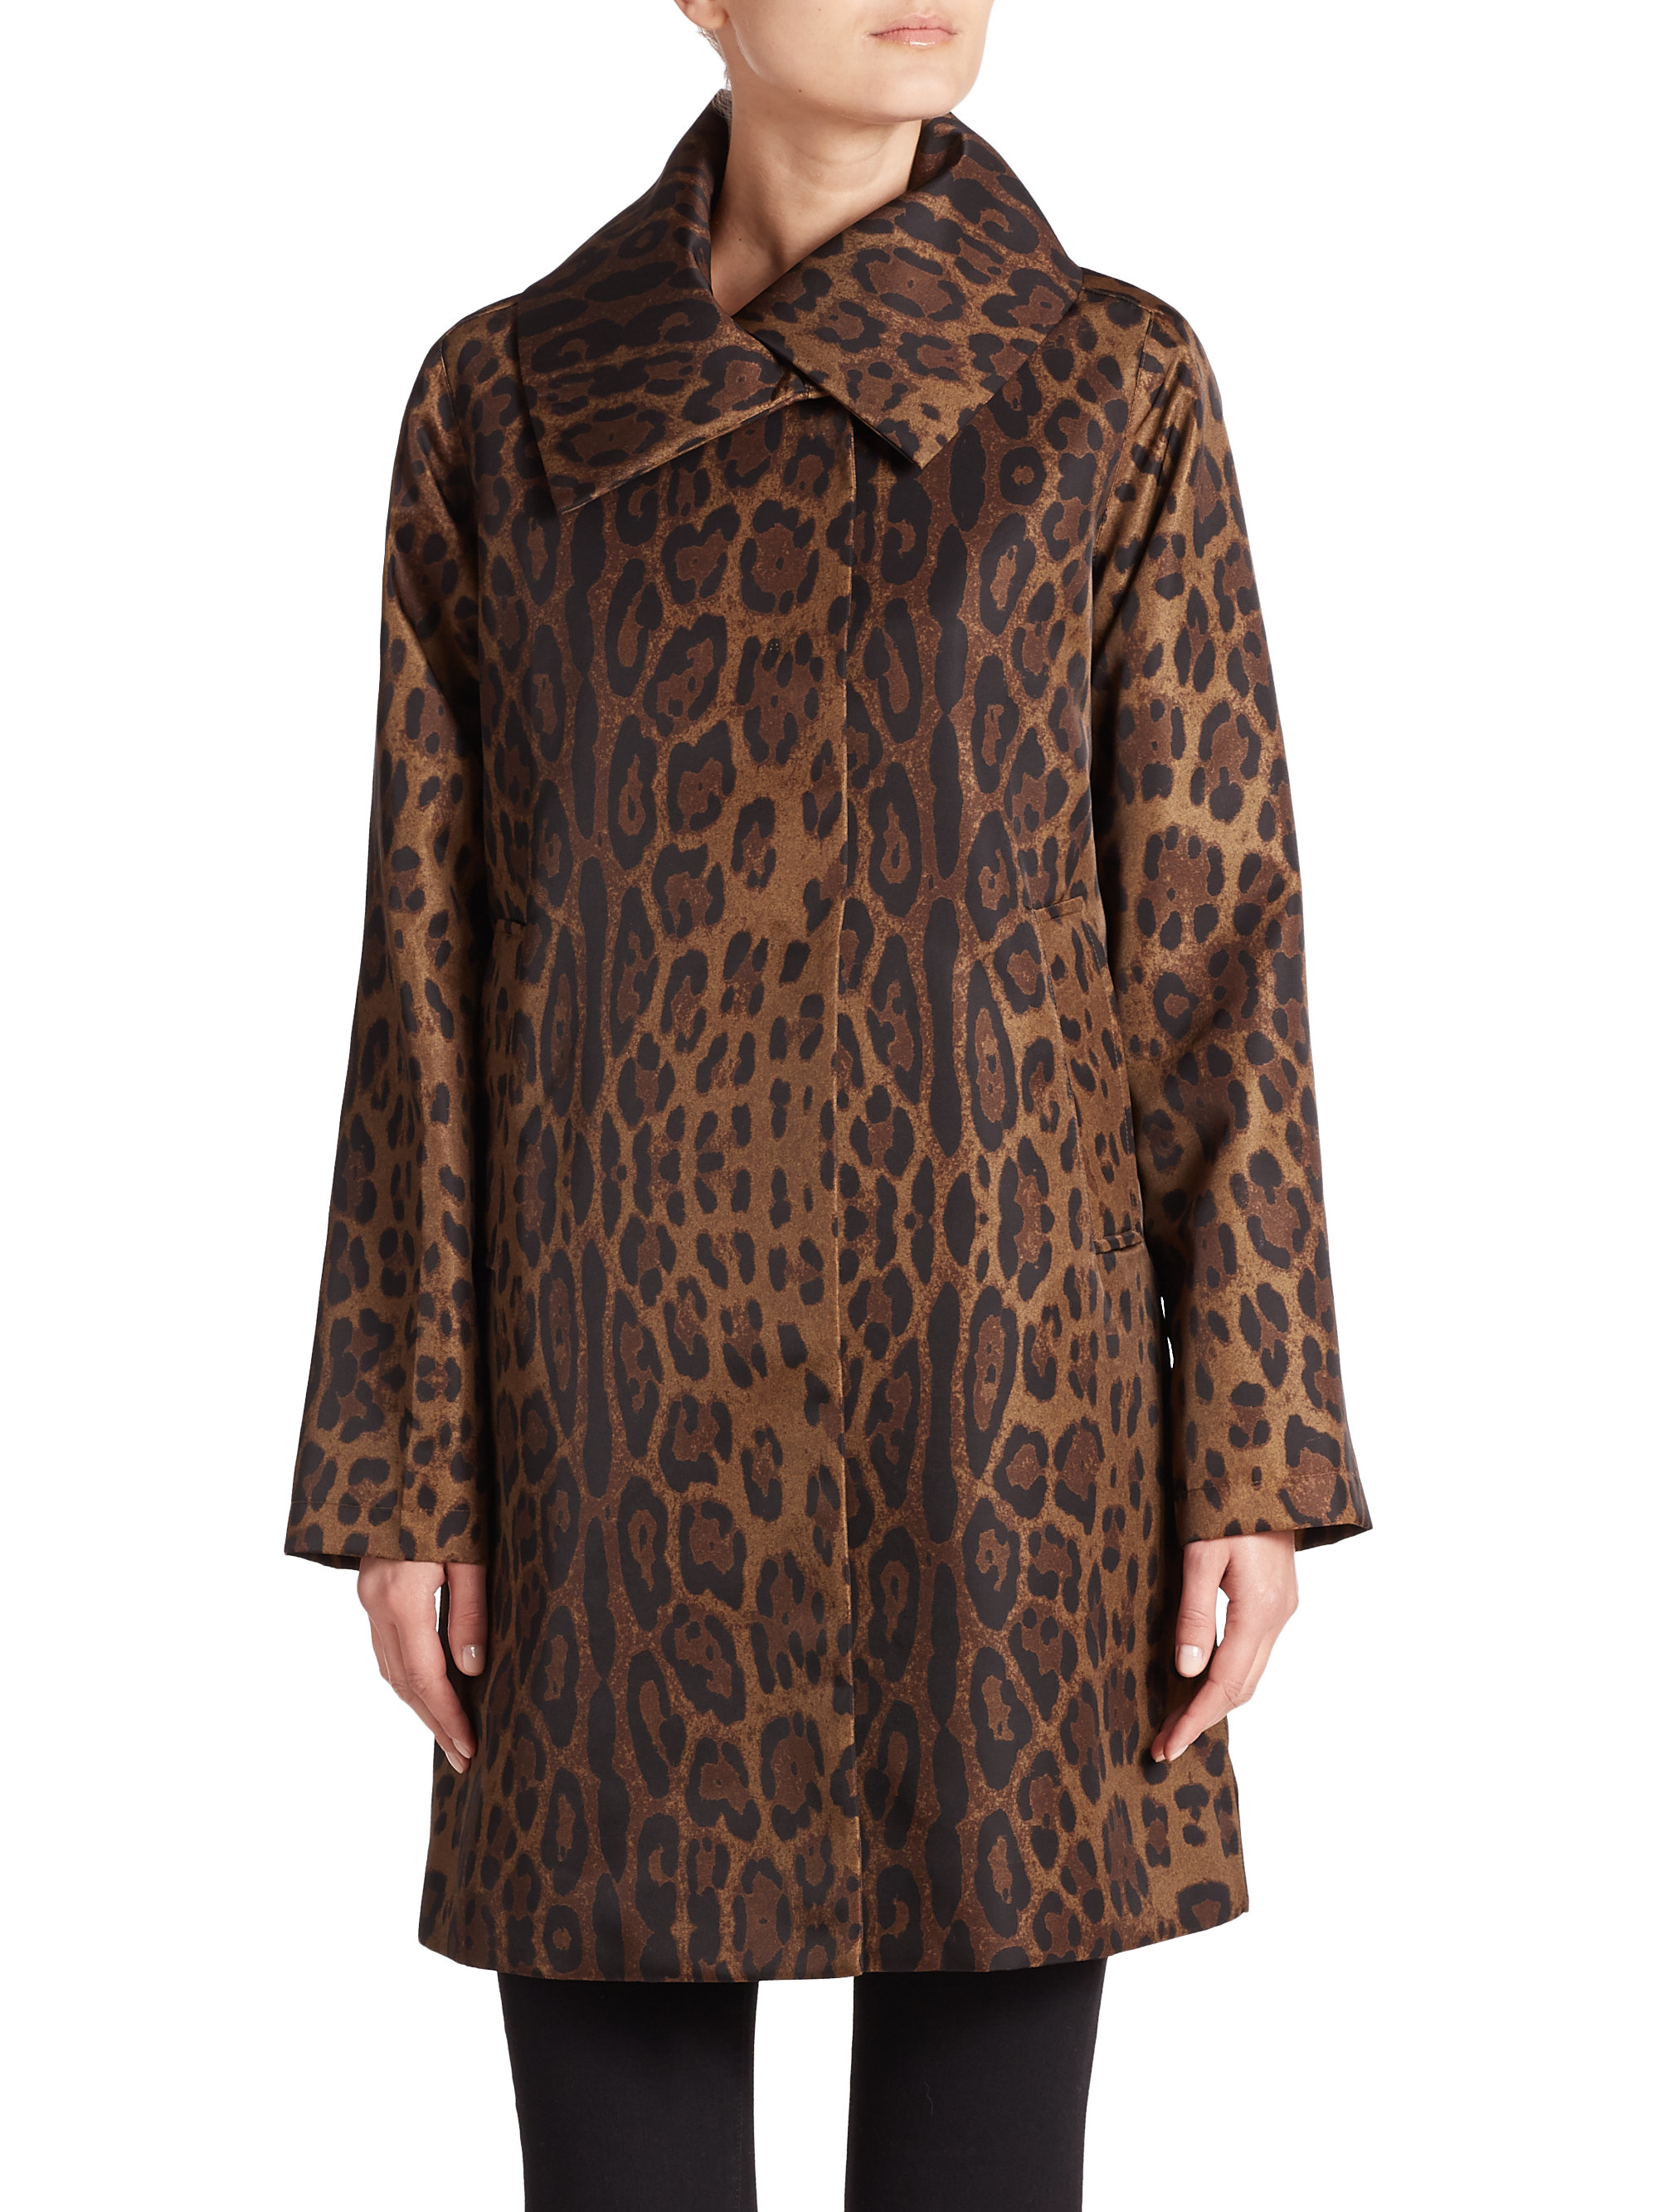 Lyst - Jane Post Leopard Jane Coat